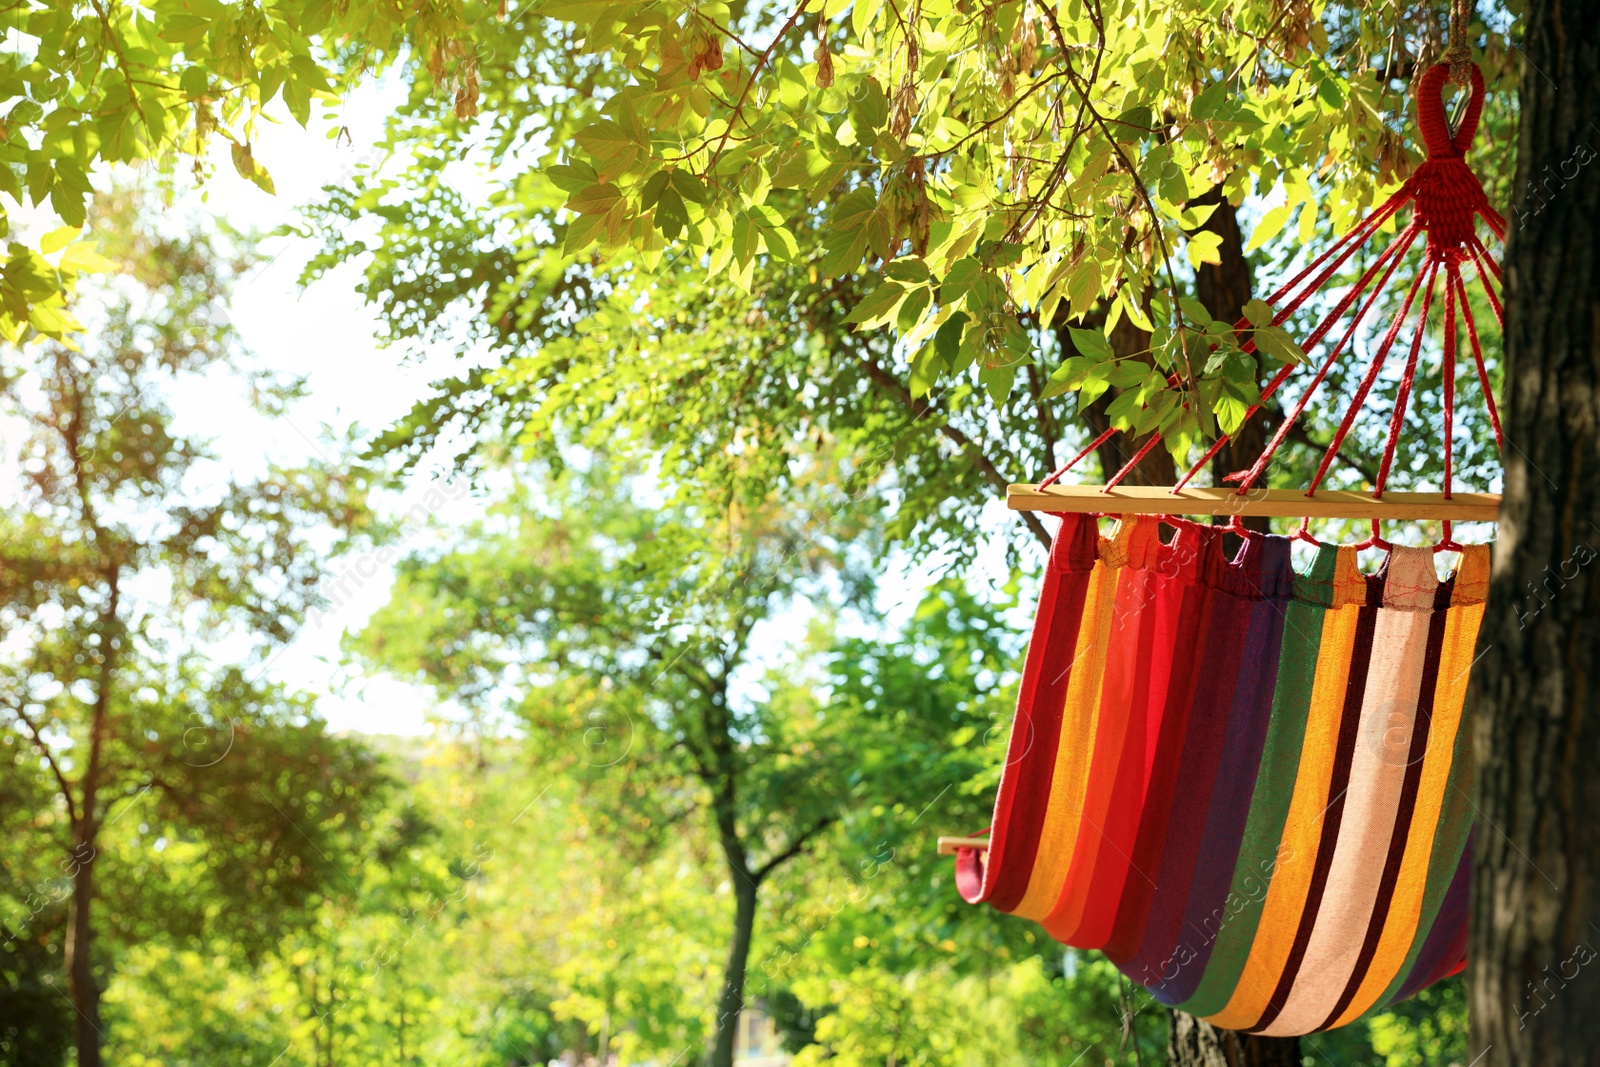 Photo of Bright comfortable hammock hanging in green garden